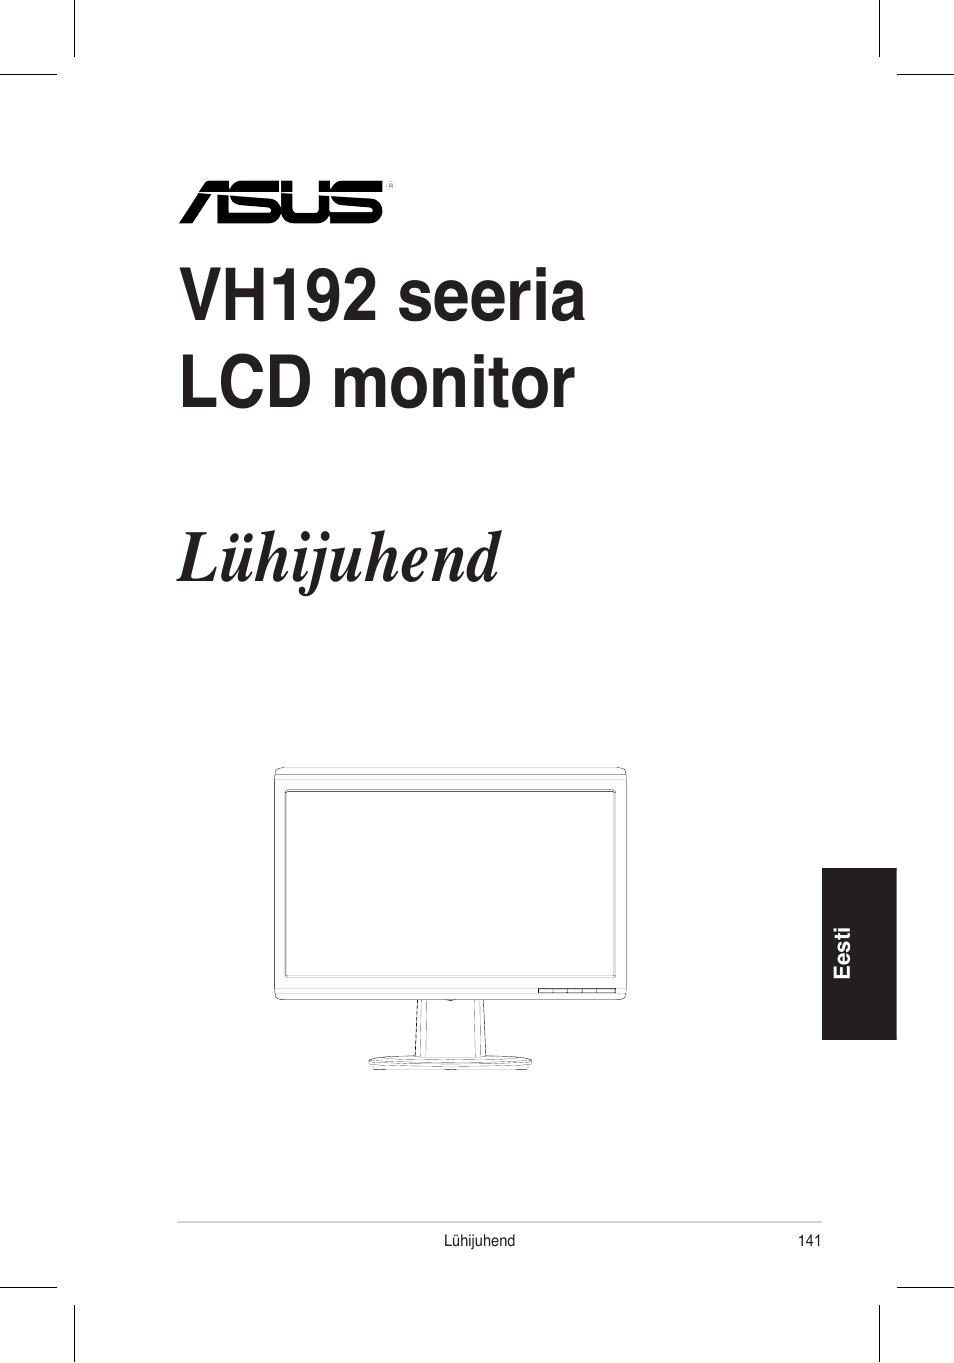 Vh192 seeria lcd monitor lühijuhend | Asus VH192 User Manual | Page 143 /  157